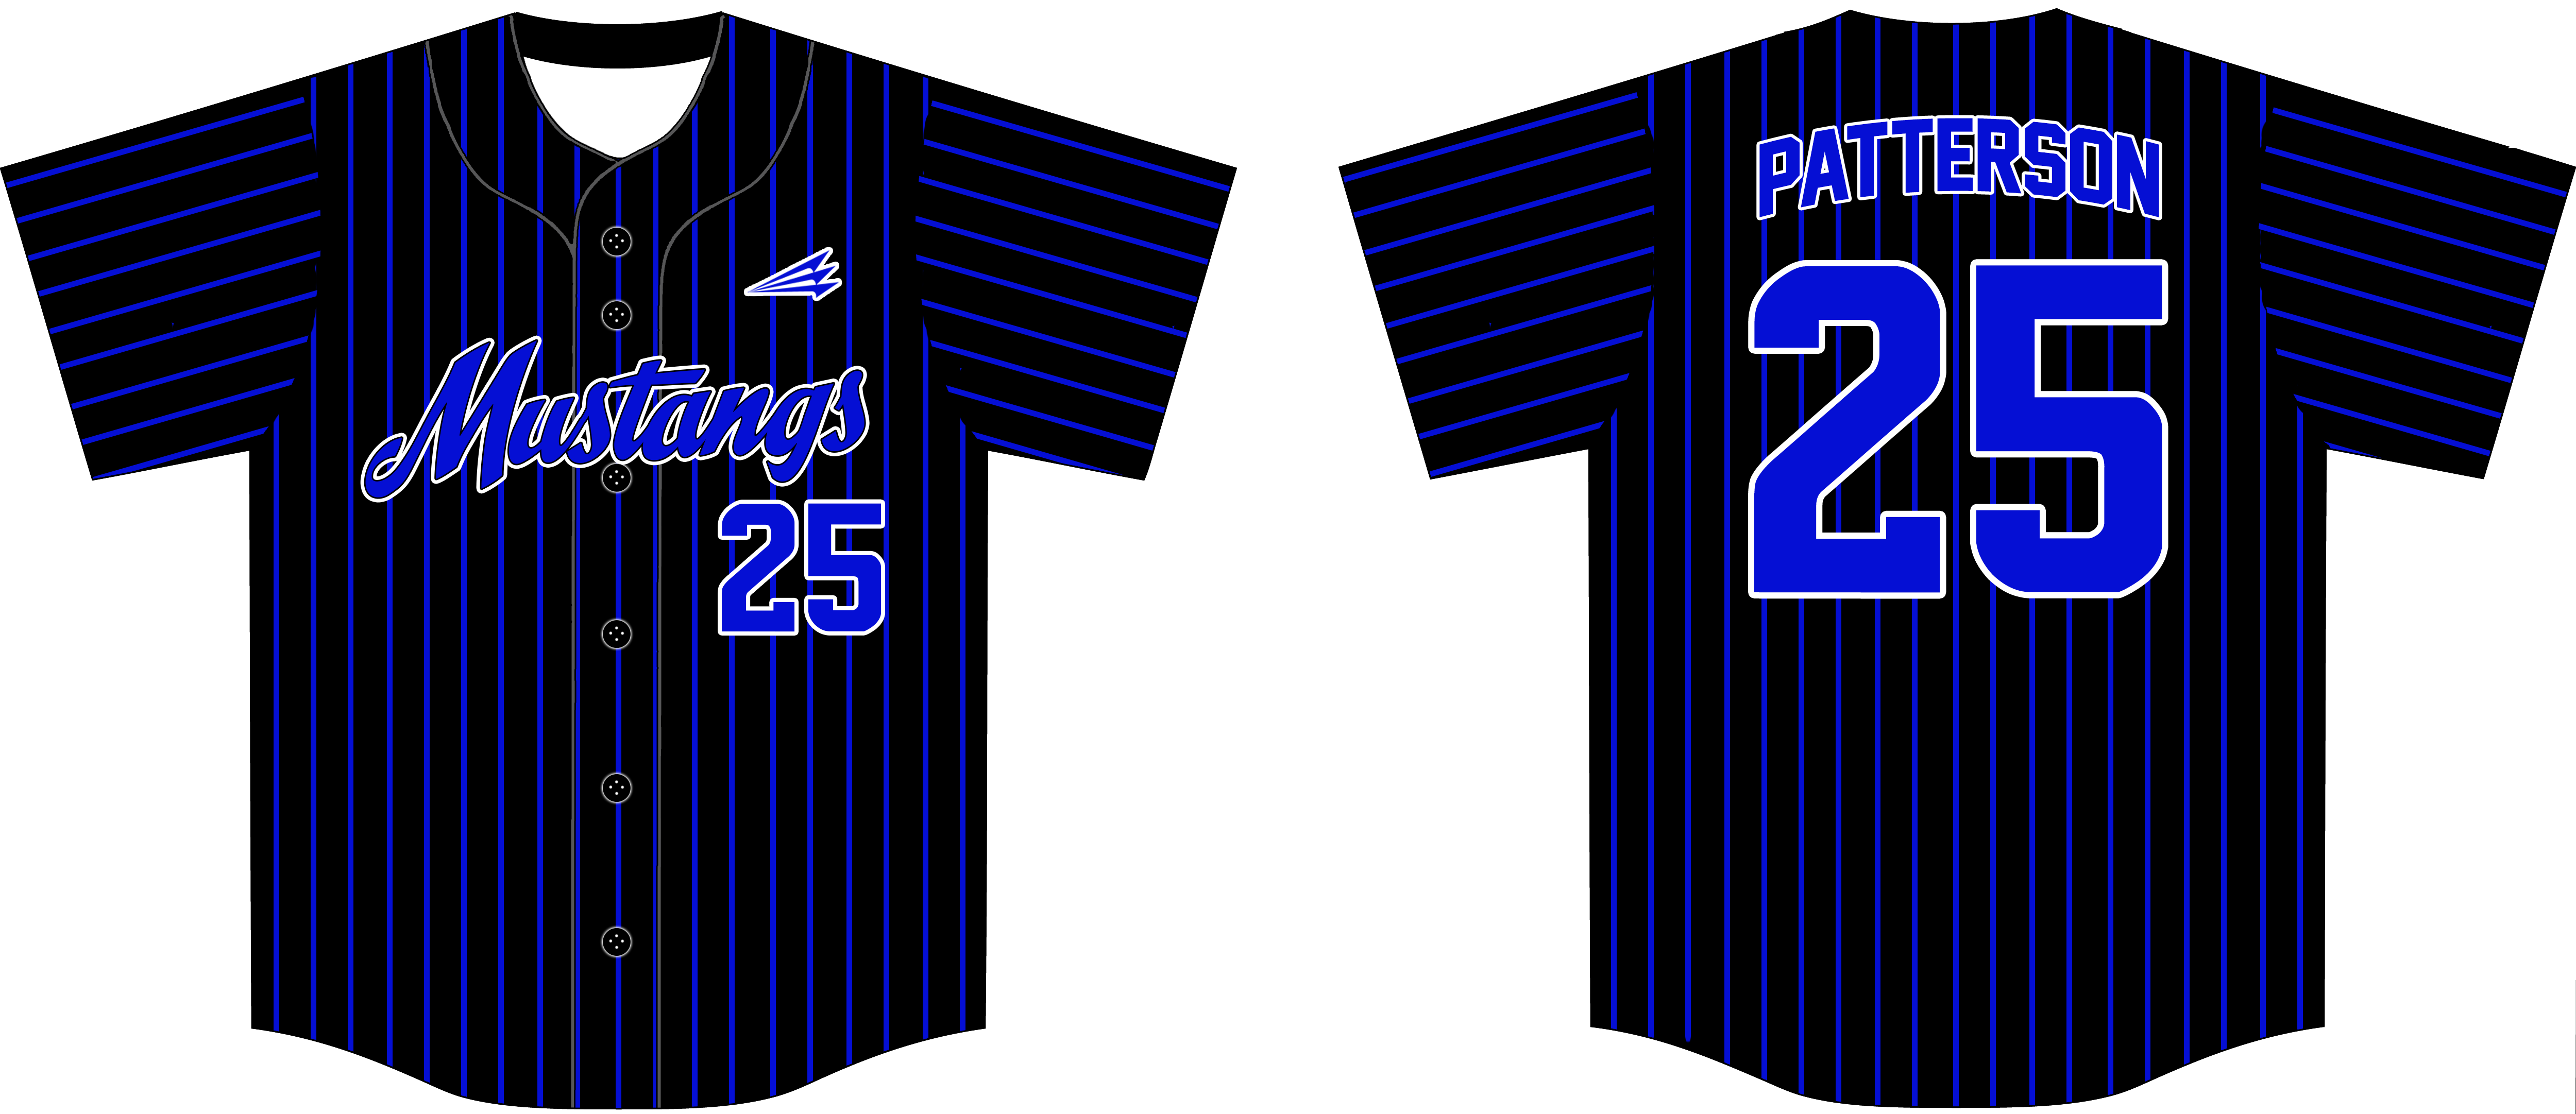 Mustangs (Patterson) Custom Baseball Jerseys - Custom Baseball Jerseys .com - The ...